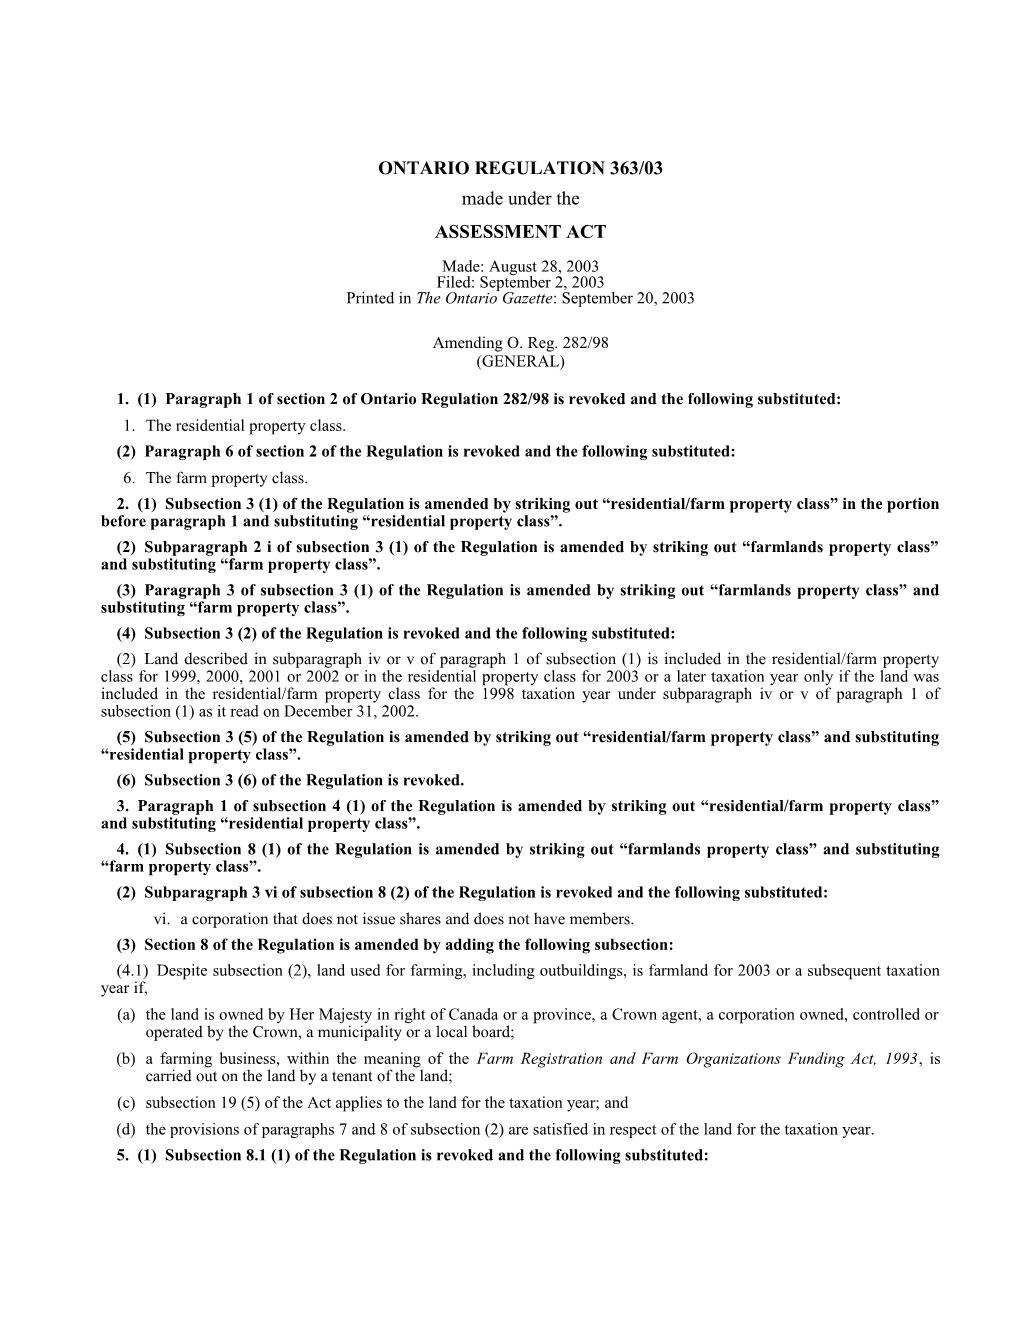 ASSESSMENT ACT - O. Reg. 363/03